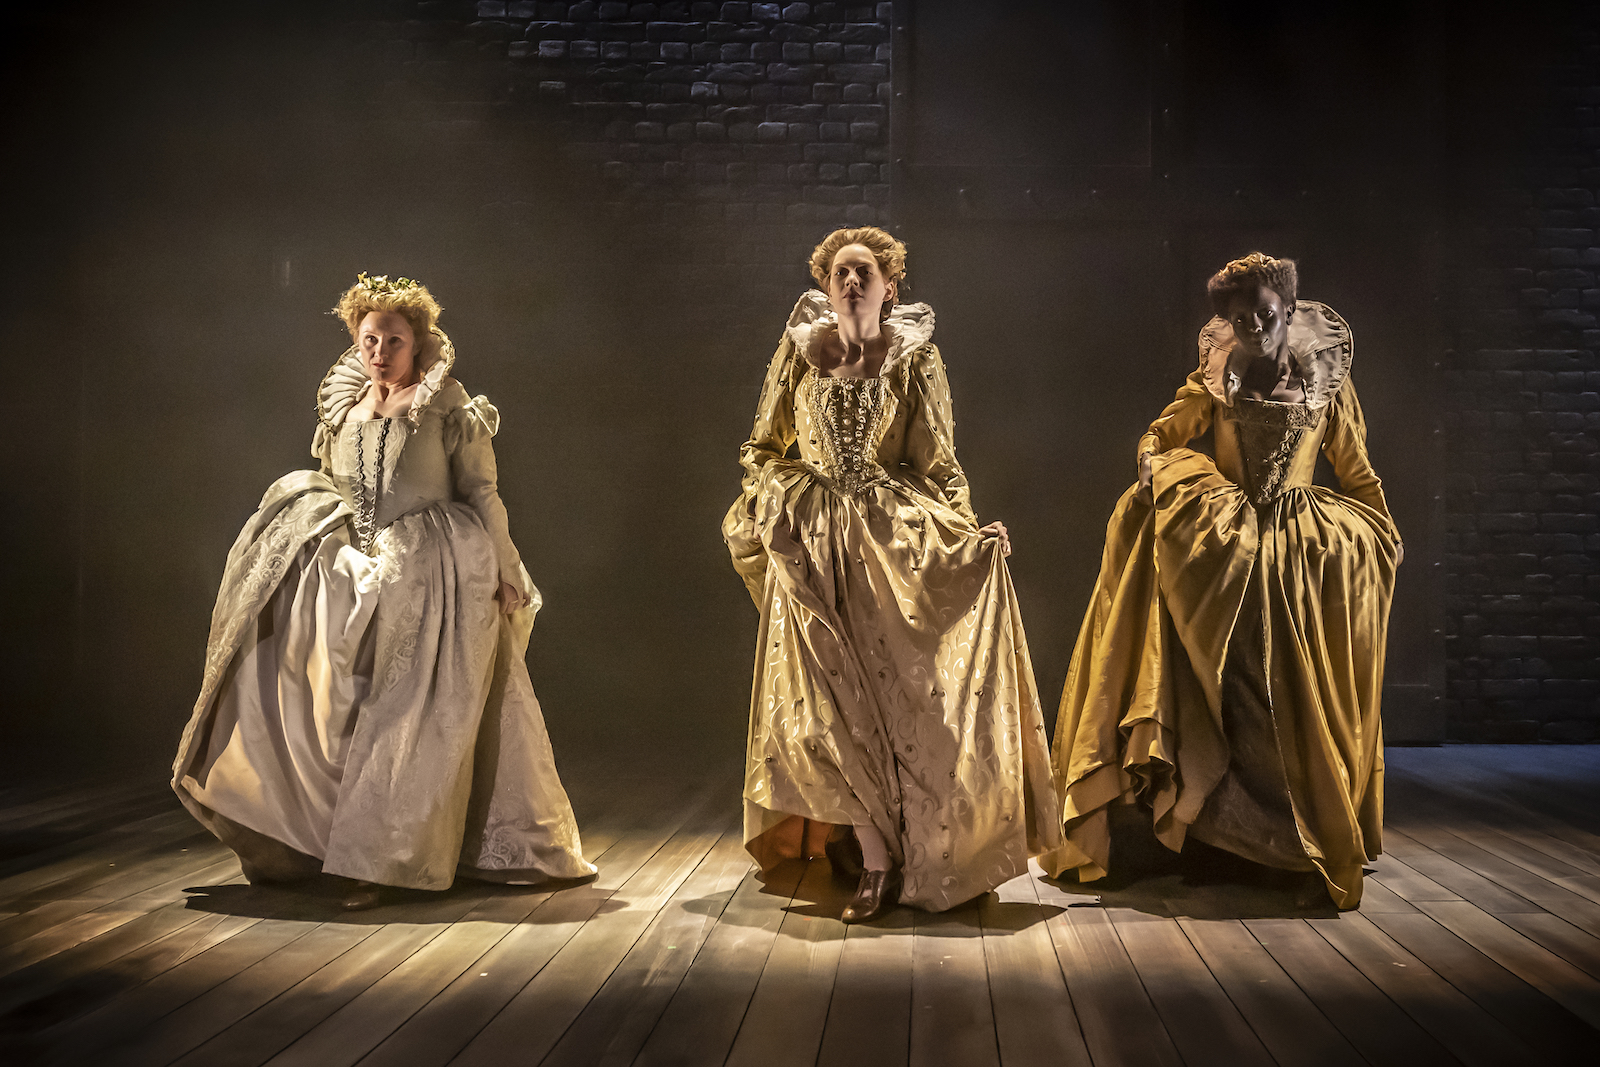 Three people in Elizabethan dress, spotlit on a stage